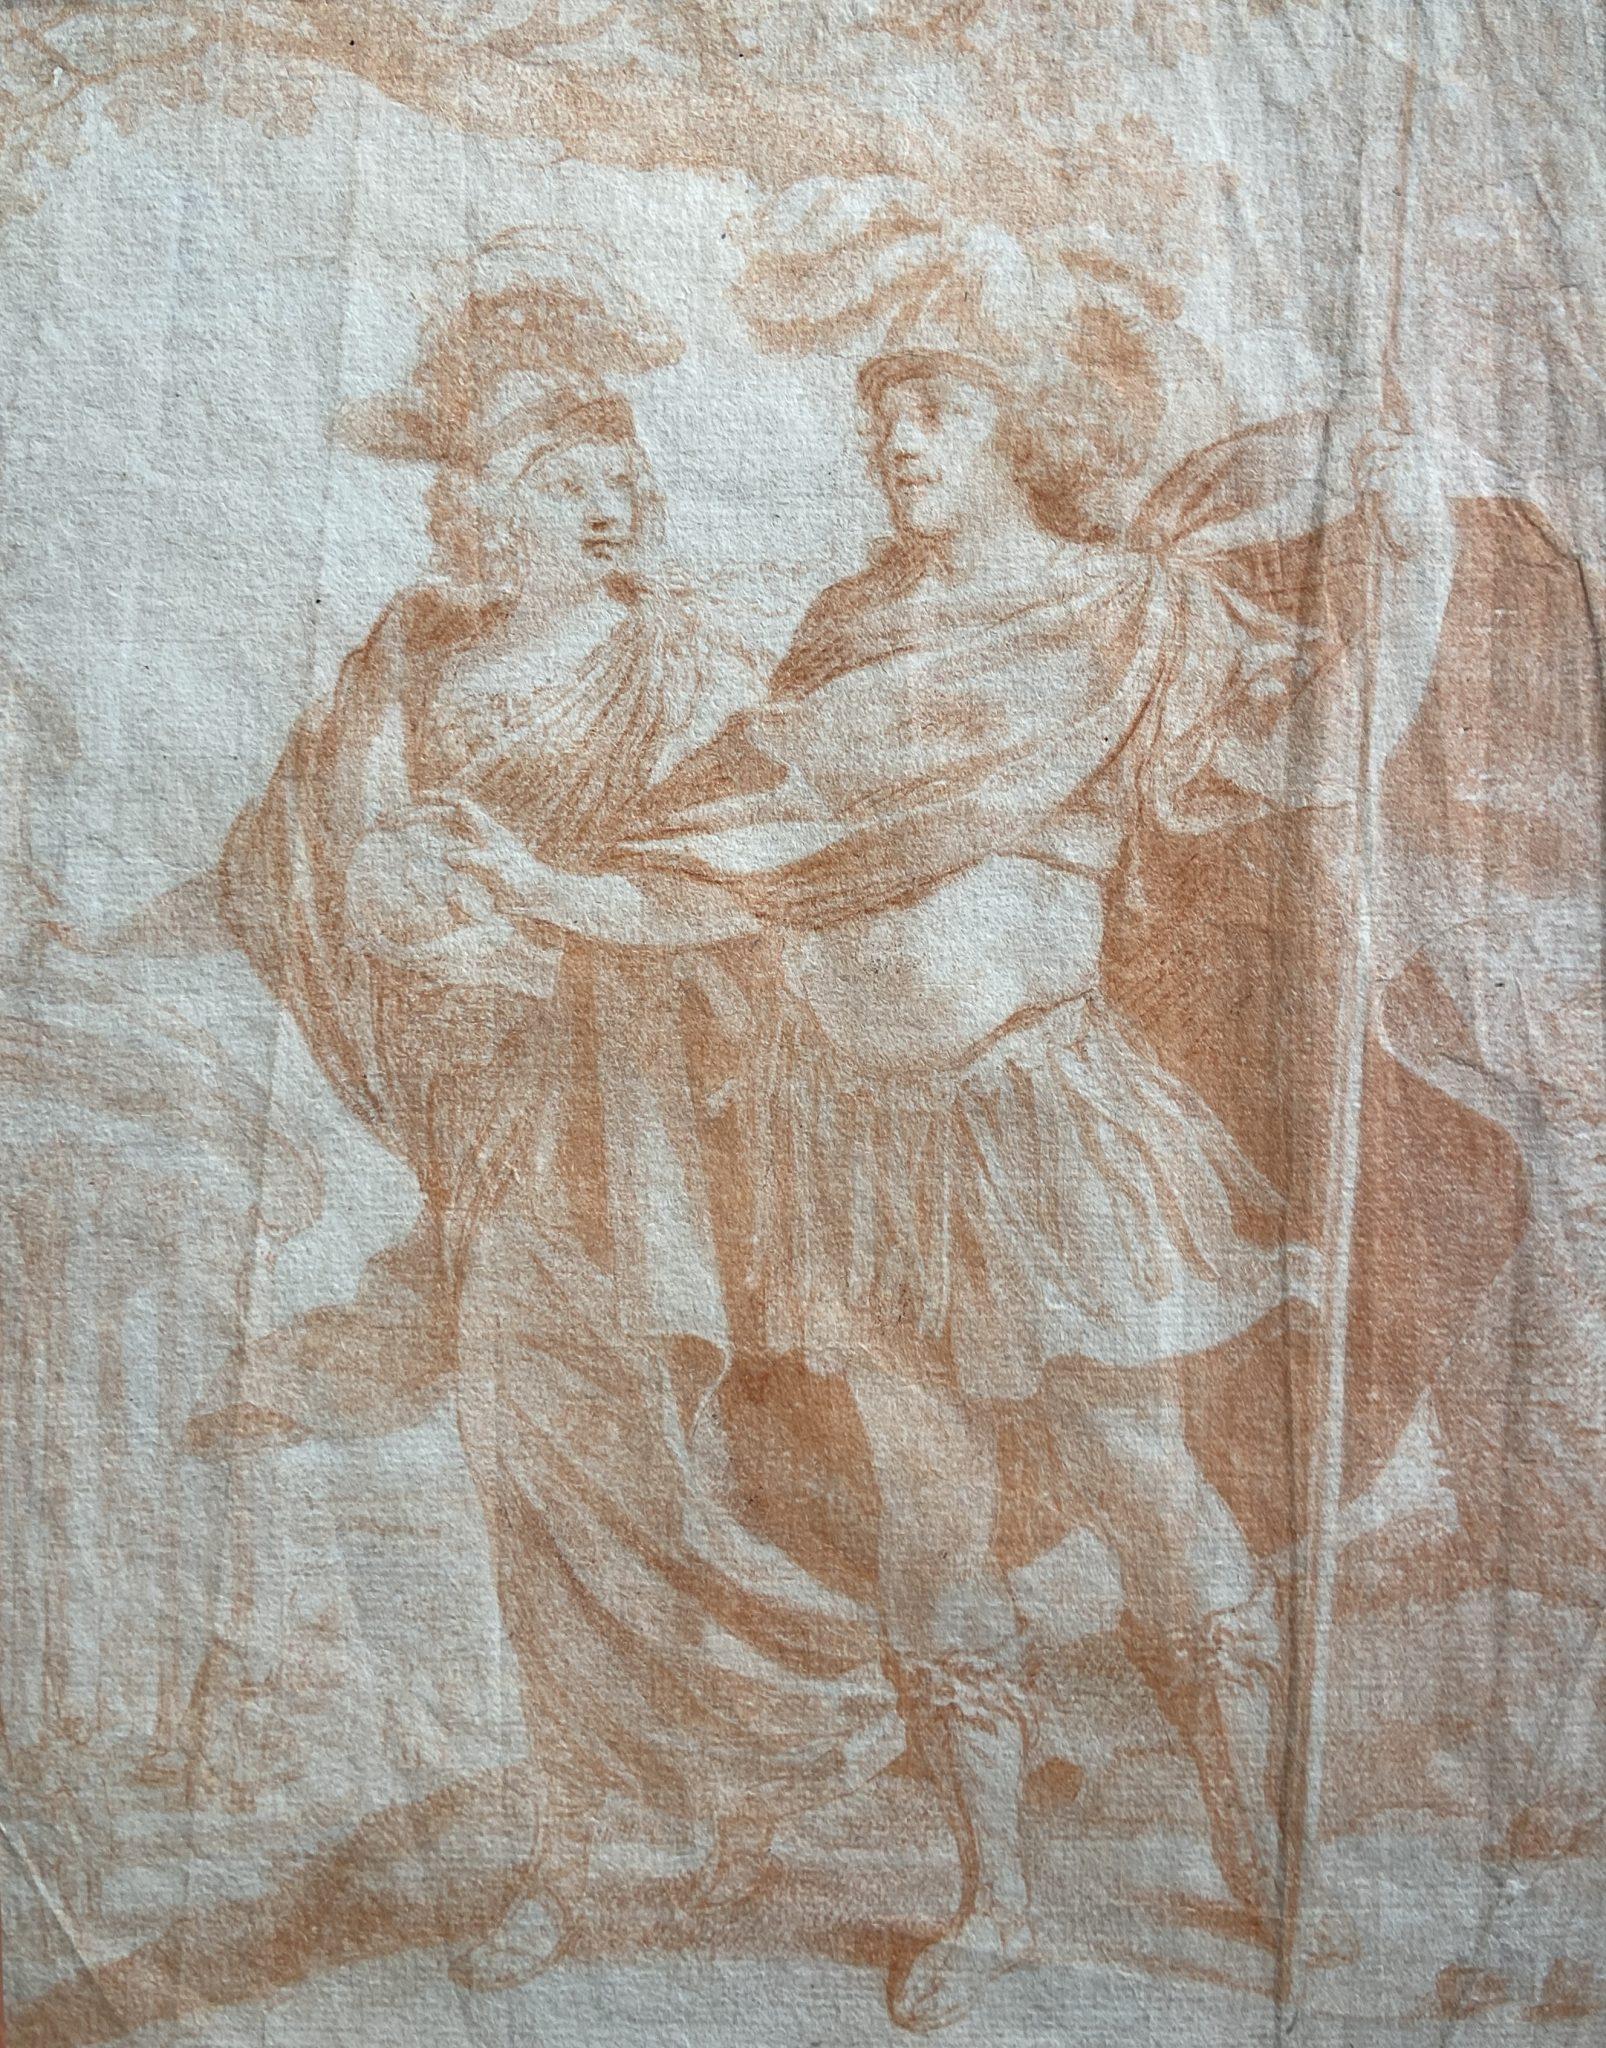 18th Century Italian School Figurative Art - The Allegory of Minerva, Sanguine Chalk Drawing, 18th Century Italian